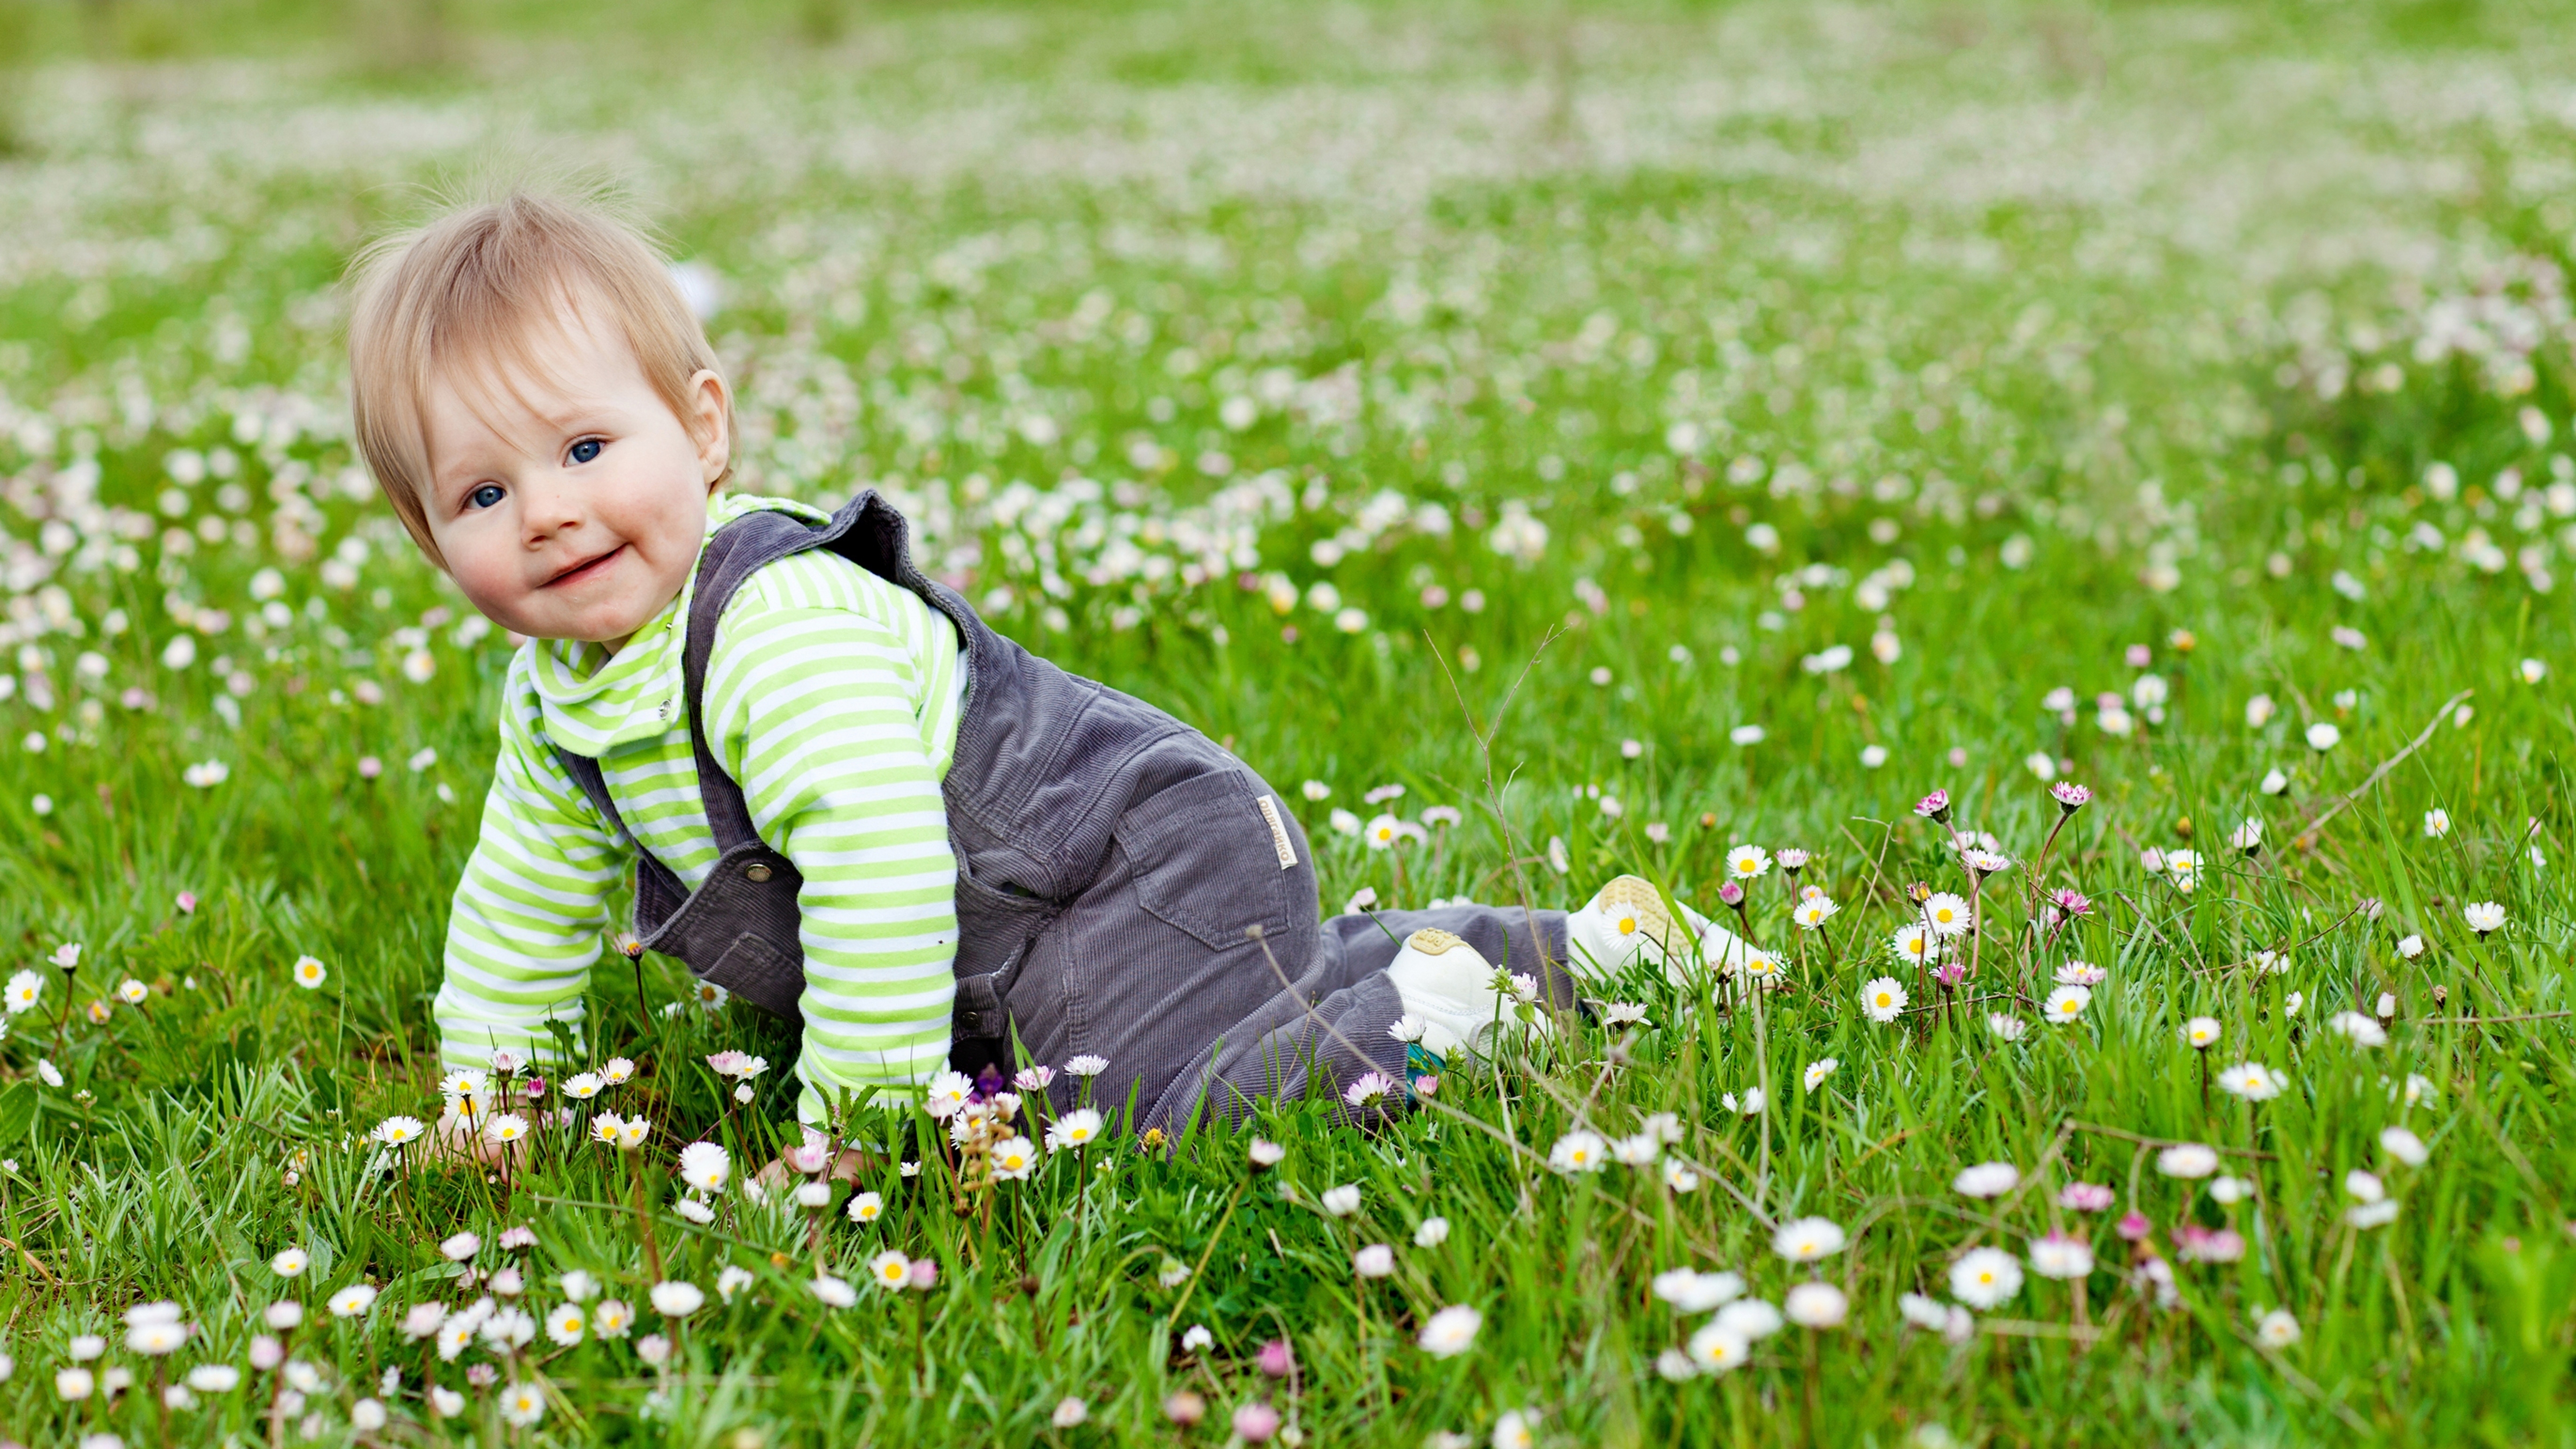 Wallpaper, child, children, happy, play, cute, Joy, garden, grass, flowers 5484x3084